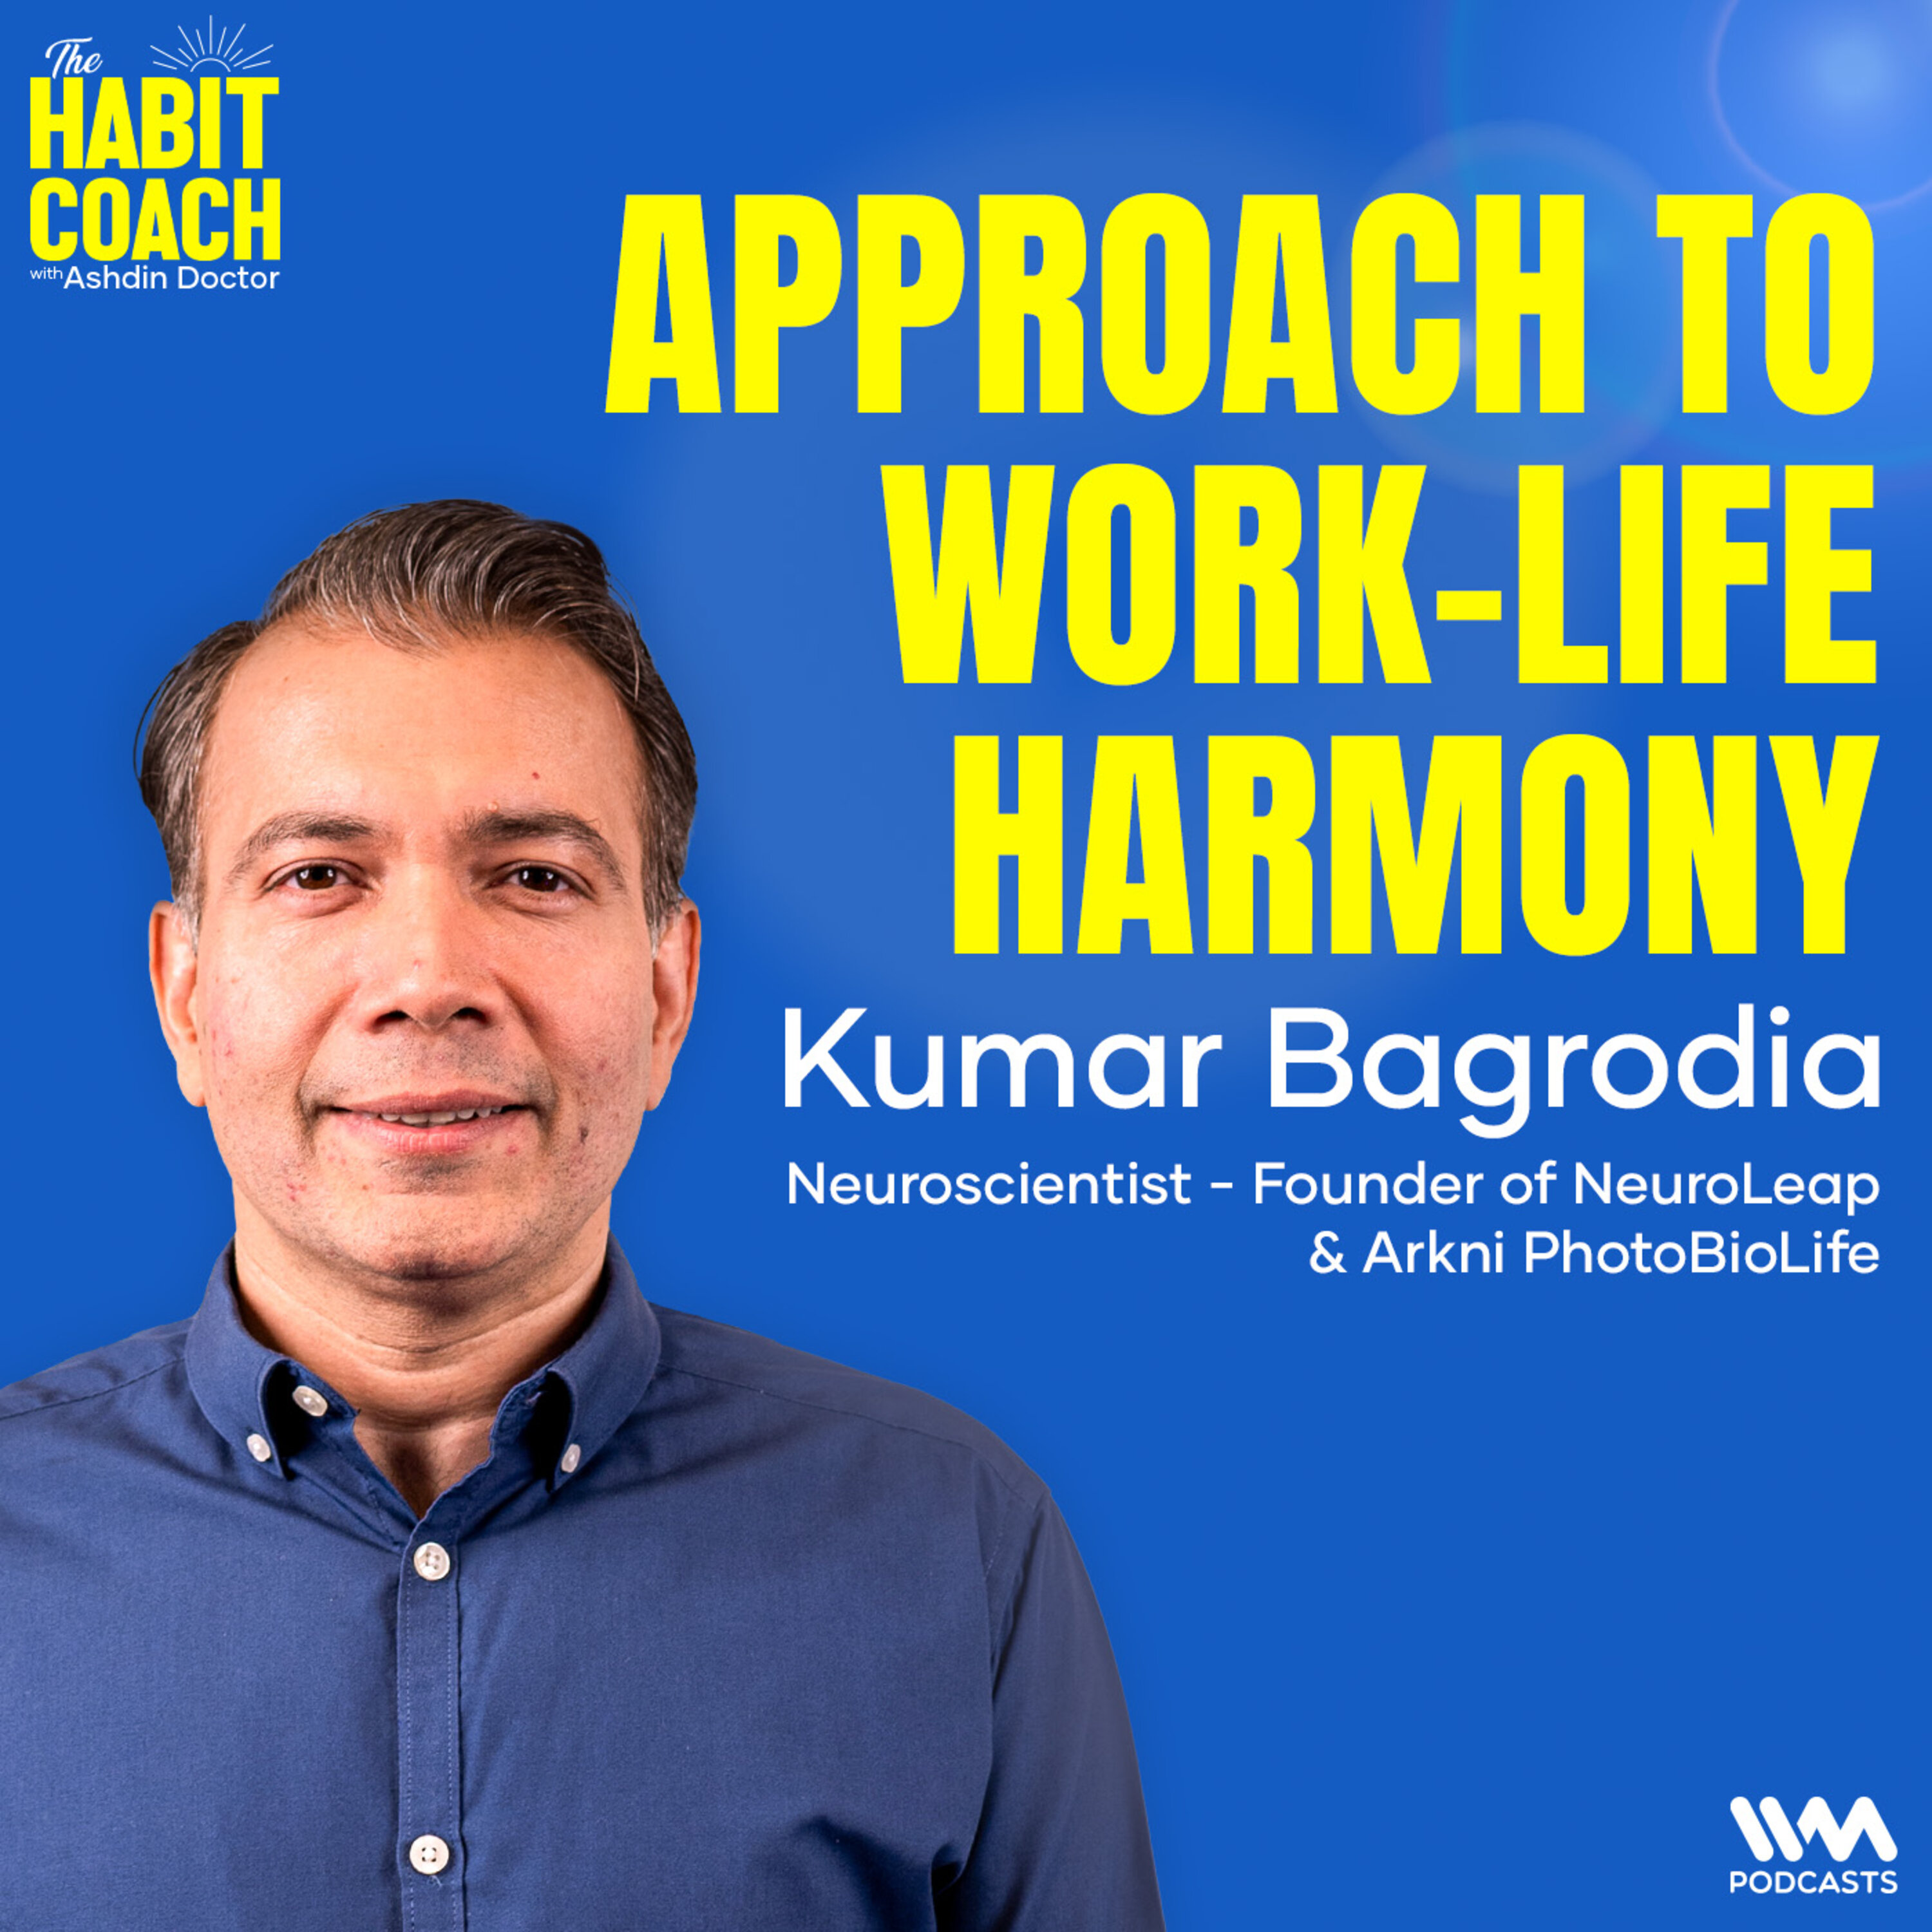 Kumaar Bagrodia: Approach to Work-Life Harmony -Neuroscientist Founder of NeuroLeap & Arkni PhotoBioLife